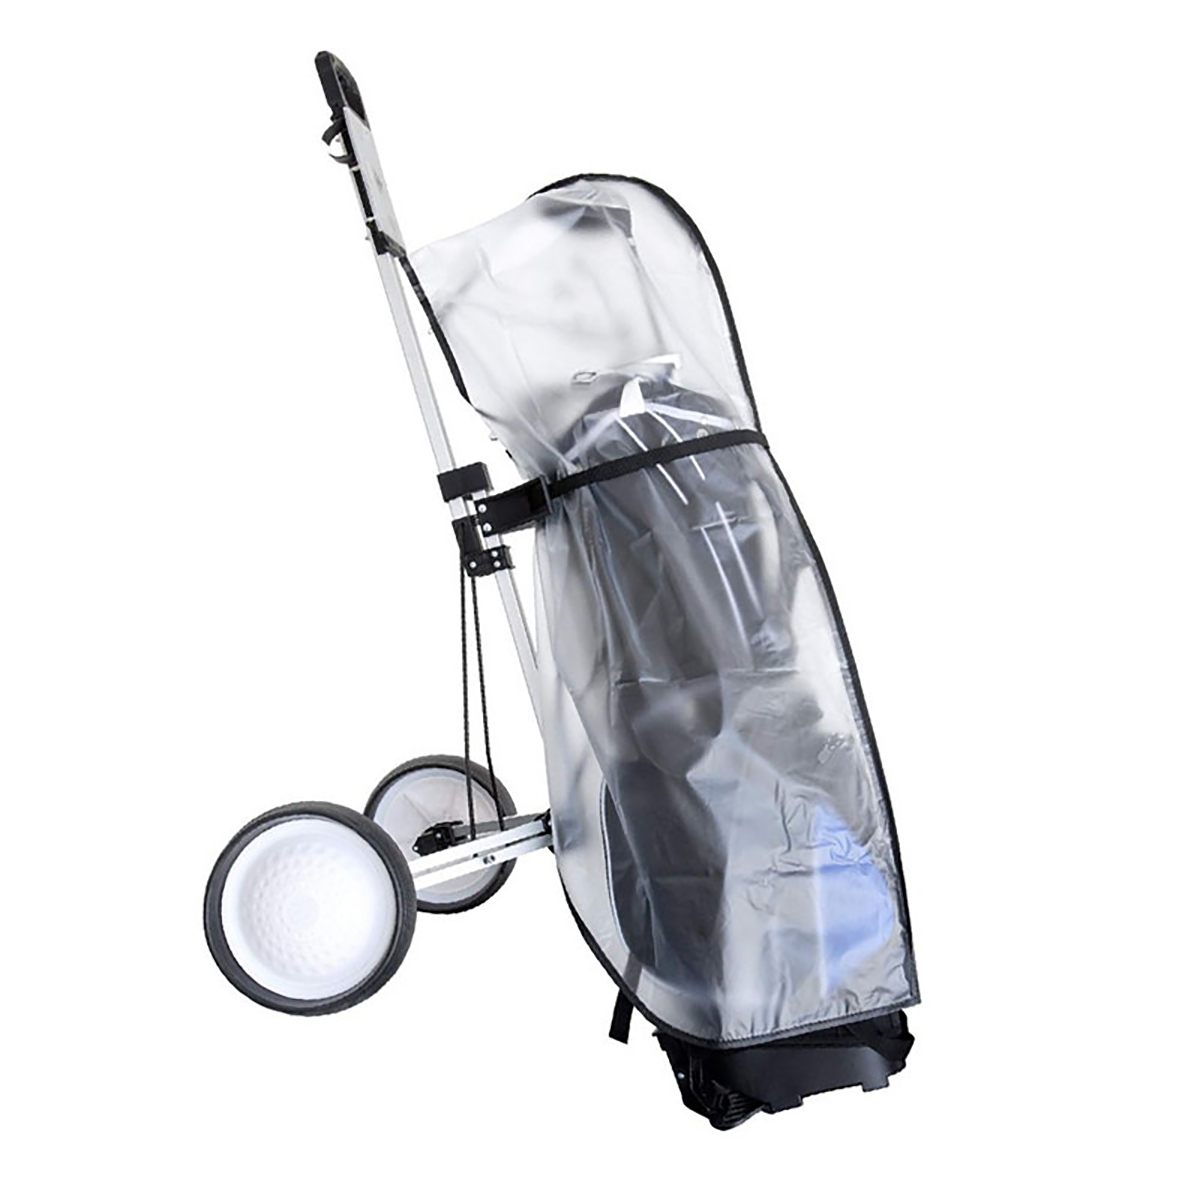 Transparent-Golf-Rain-Cover-Raincoat-Waterproof-Dustproof-Golf-Club-Bag-Protector-1549850-9